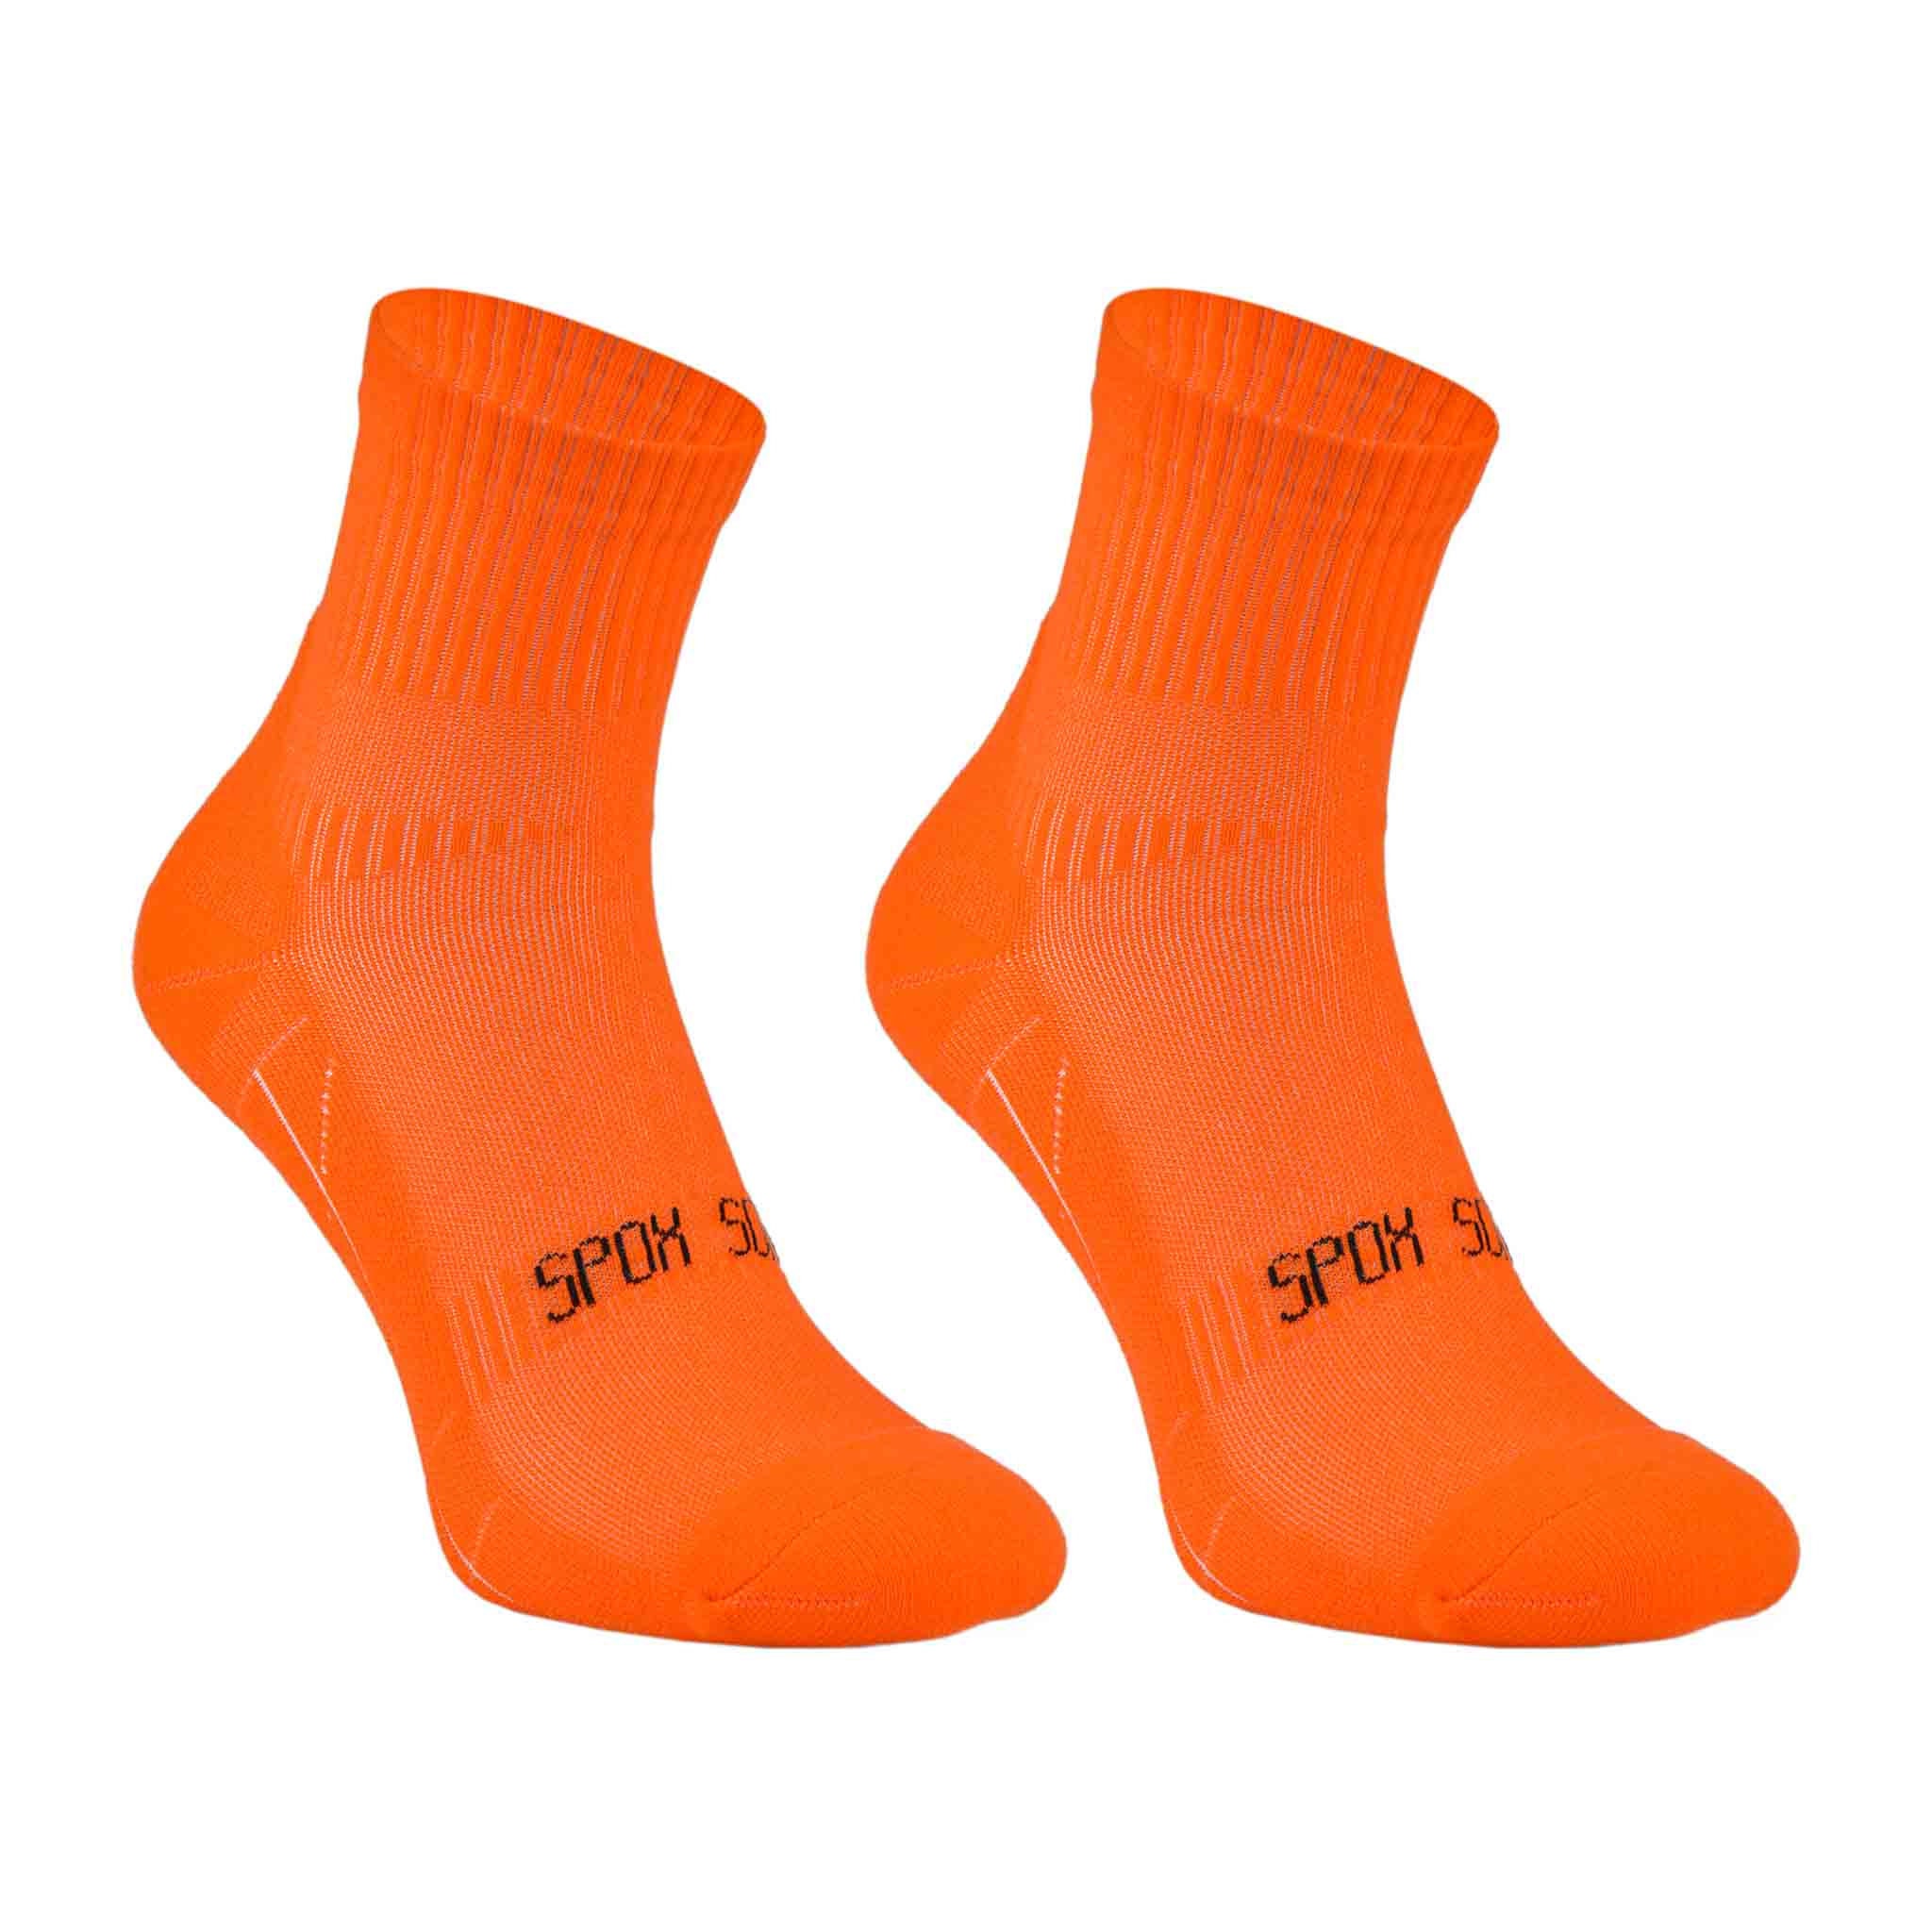 Odd Sox, Unisex, Basix Ankle Socks, Knit Cotton, Comfortable, Neon